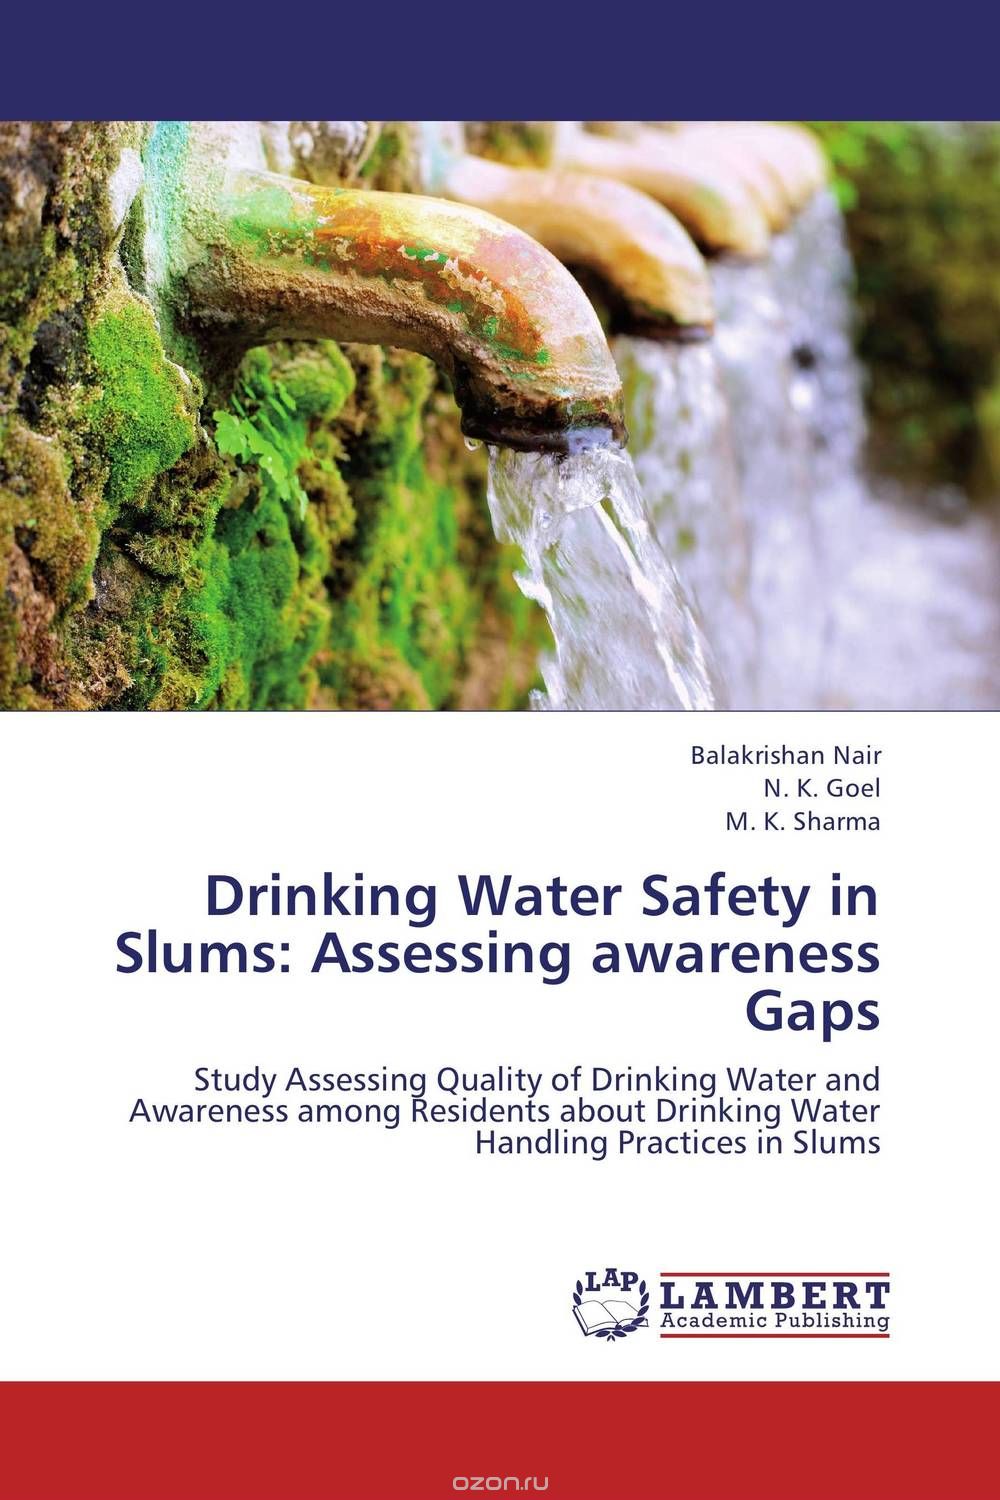 Скачать книгу "Drinking Water Safety in Slums: Assessing awareness Gaps"